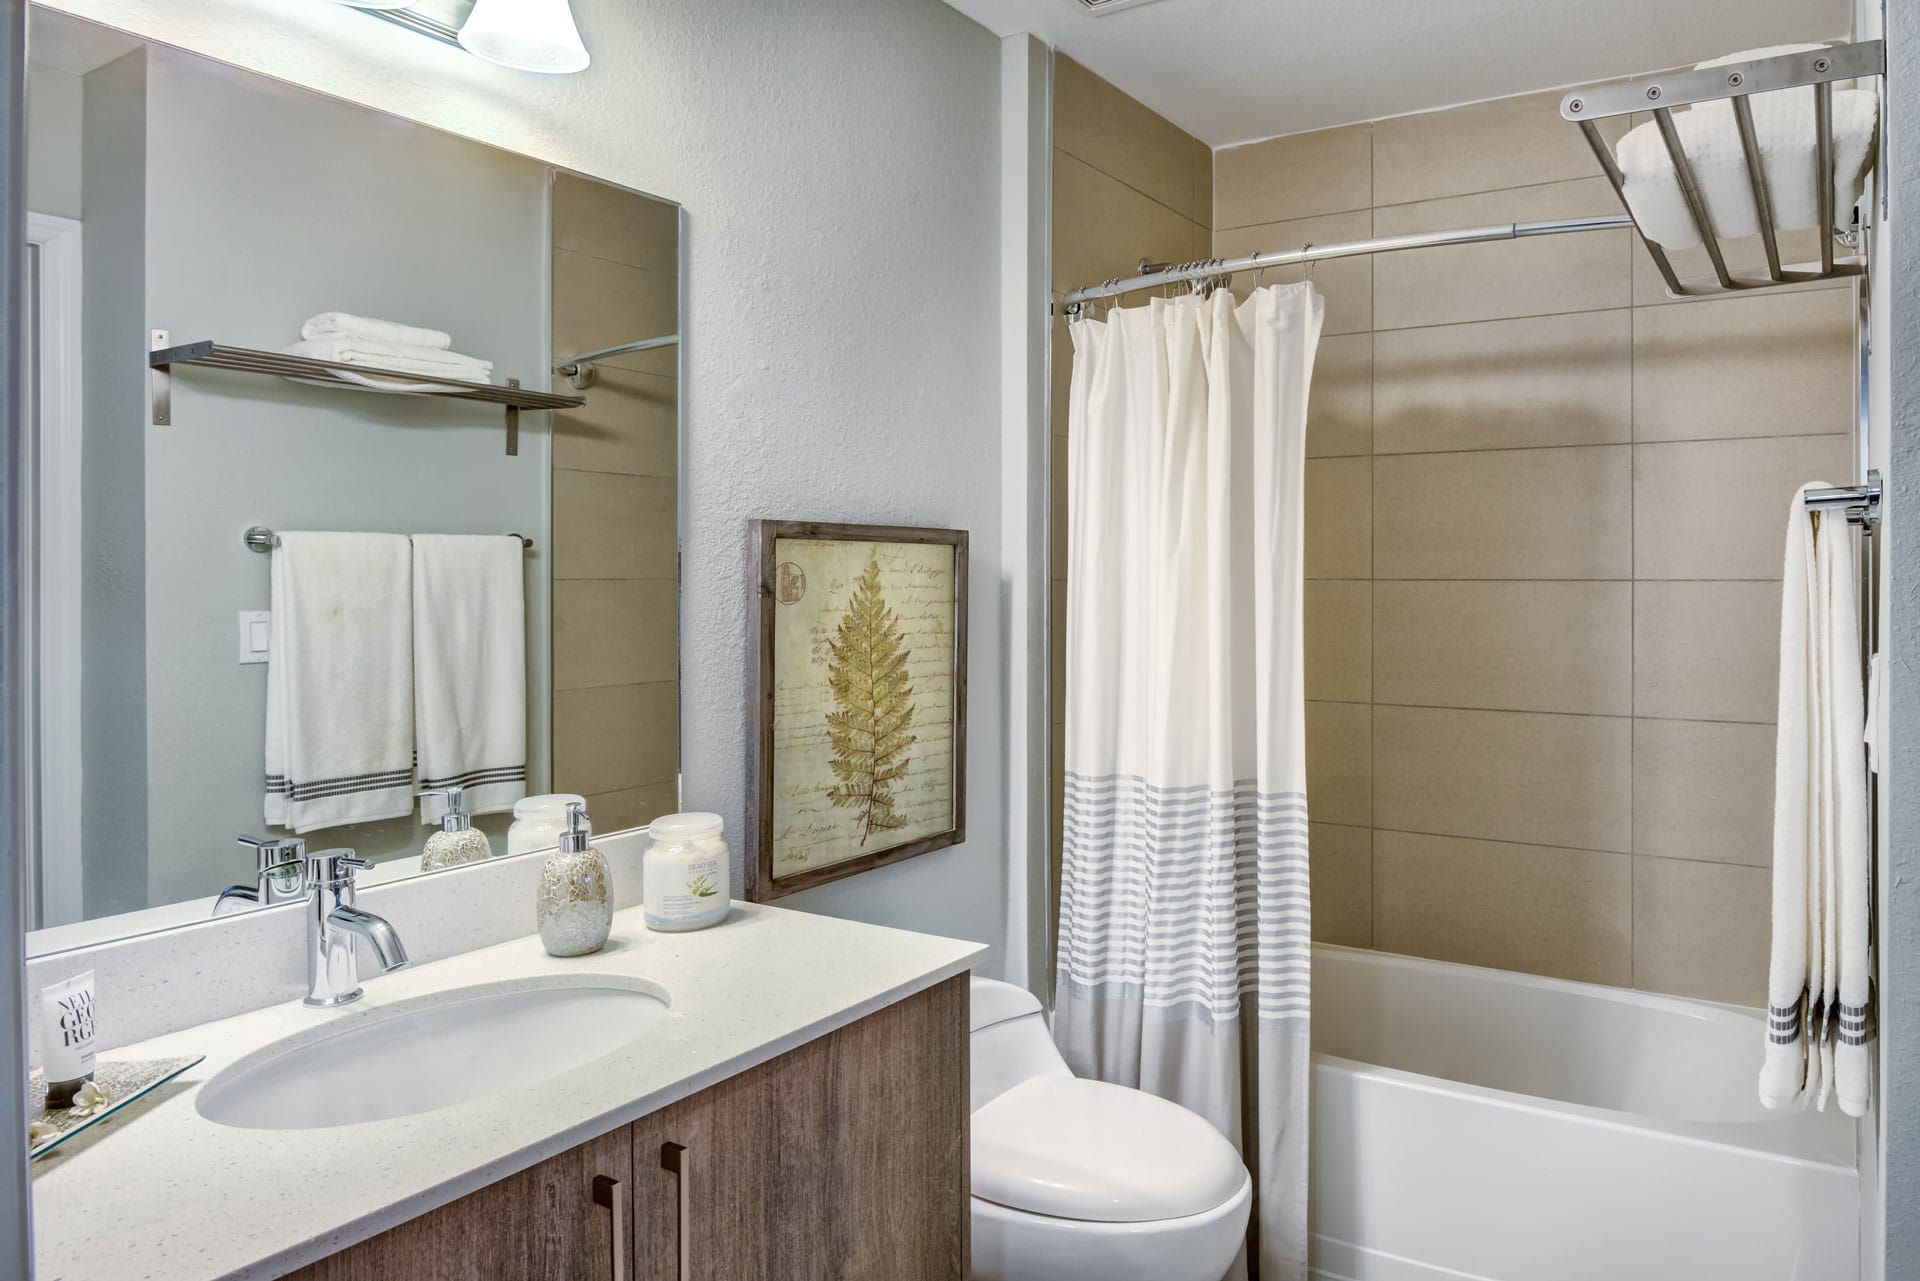 Bathroom with tub, beige tiles.